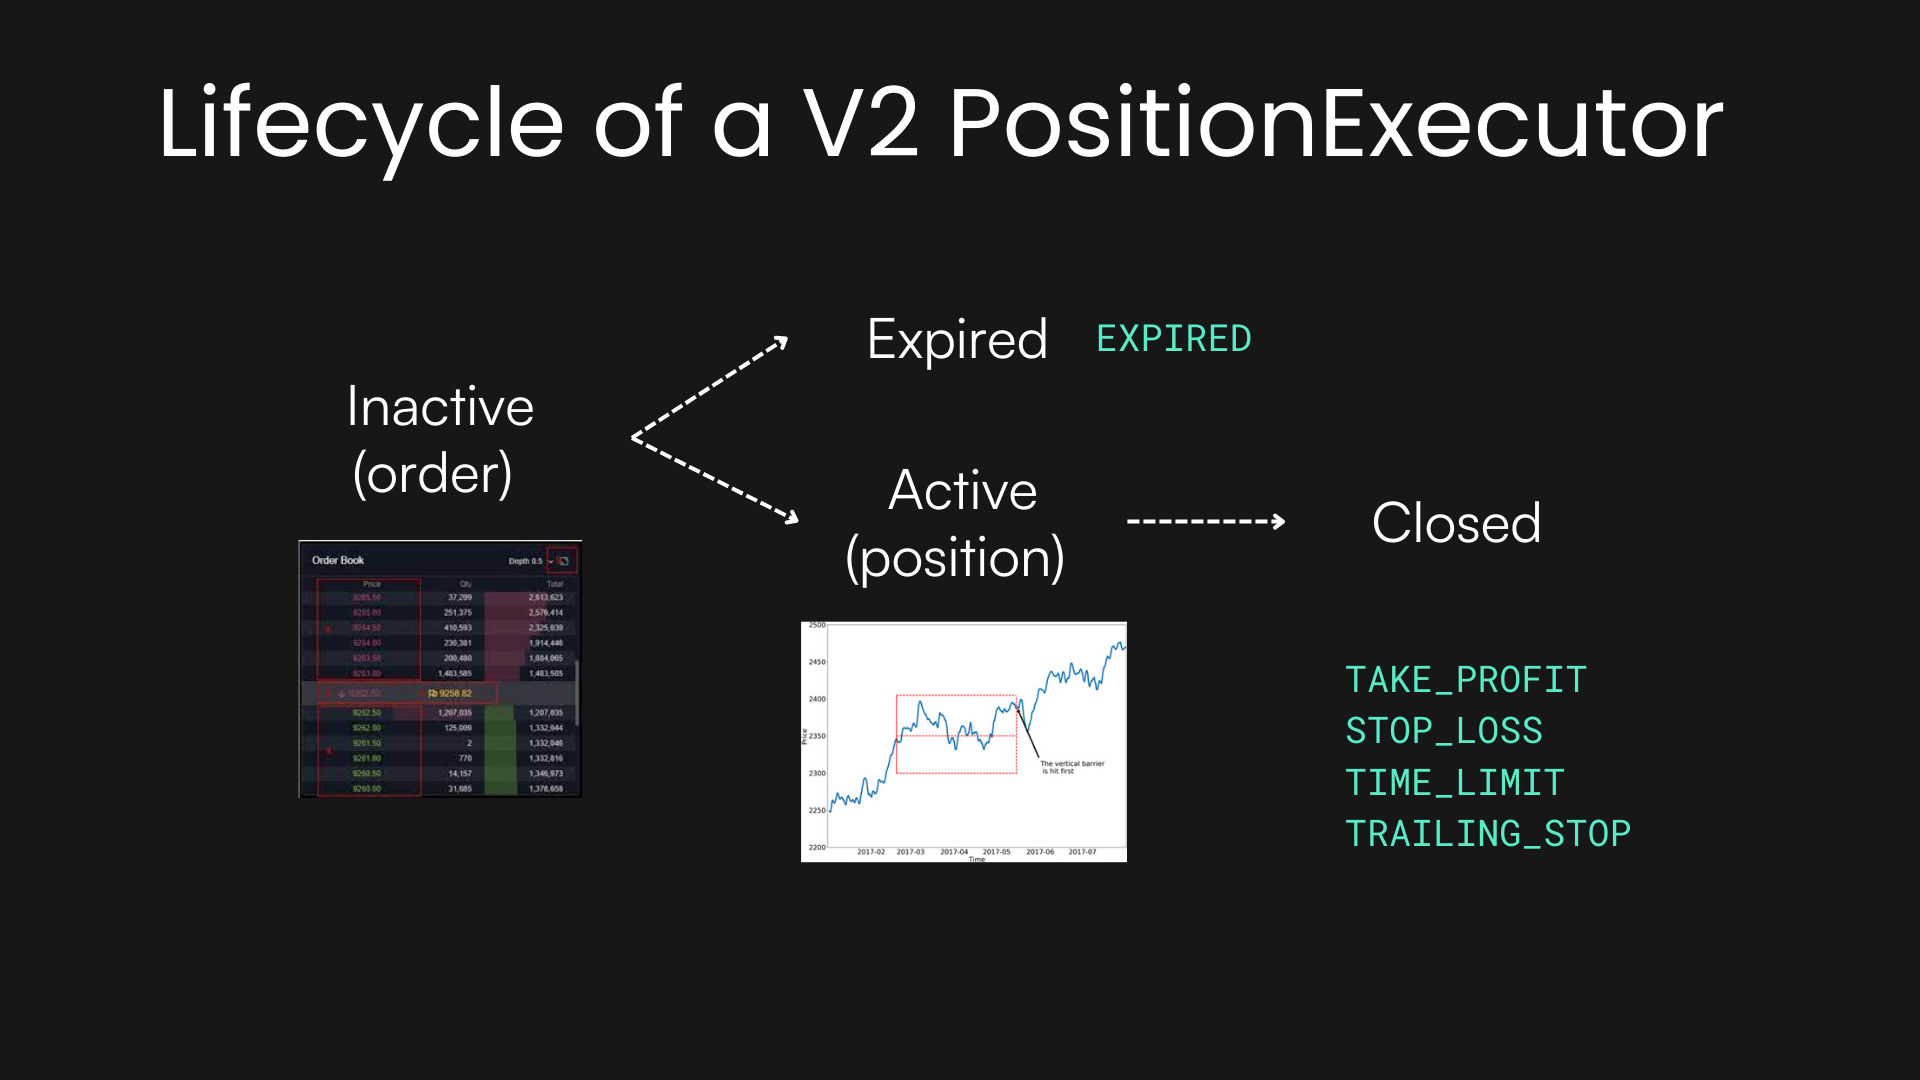 Lifecycle of a V2 PositionExecutor